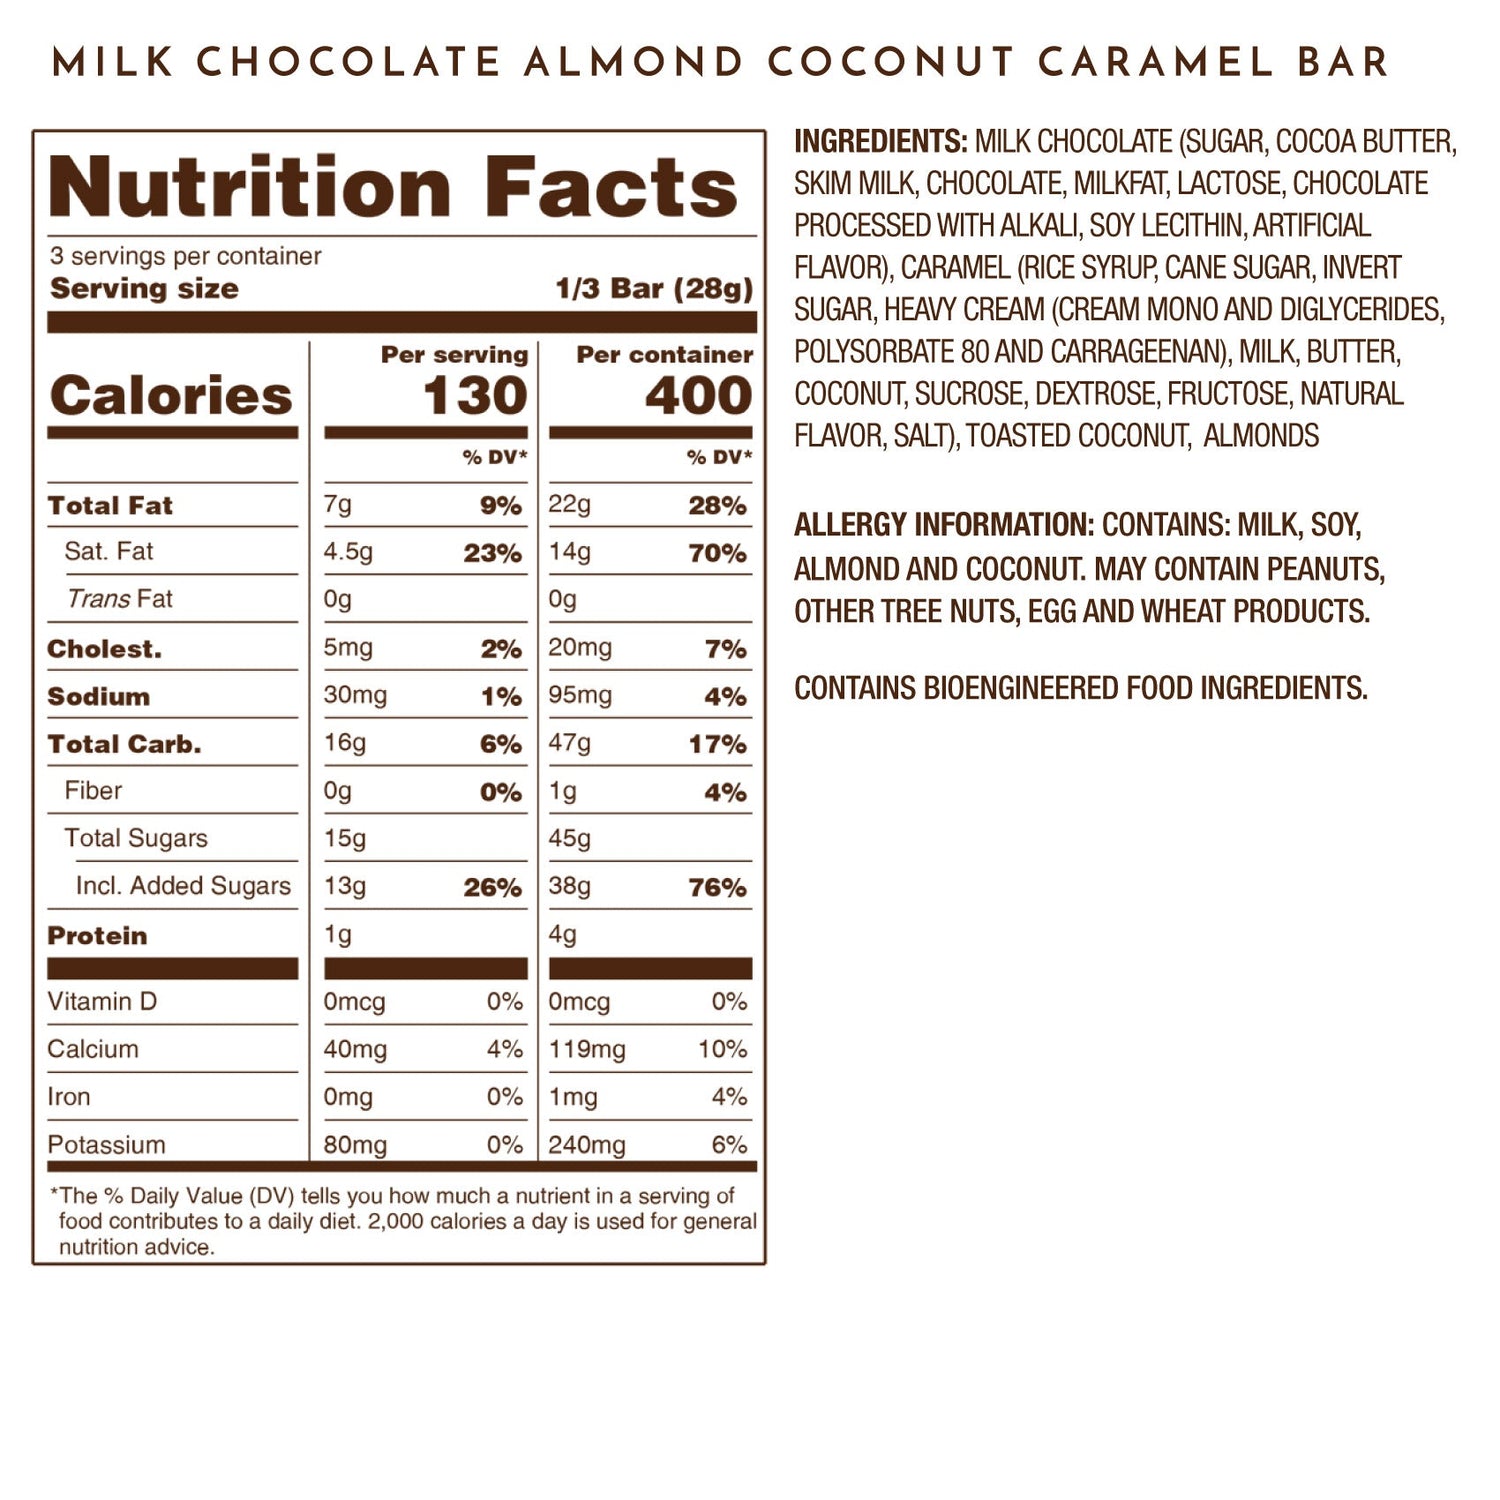 Almond Coconut Caramel Milk Chocolate Tablet Bar Nutrition Facts